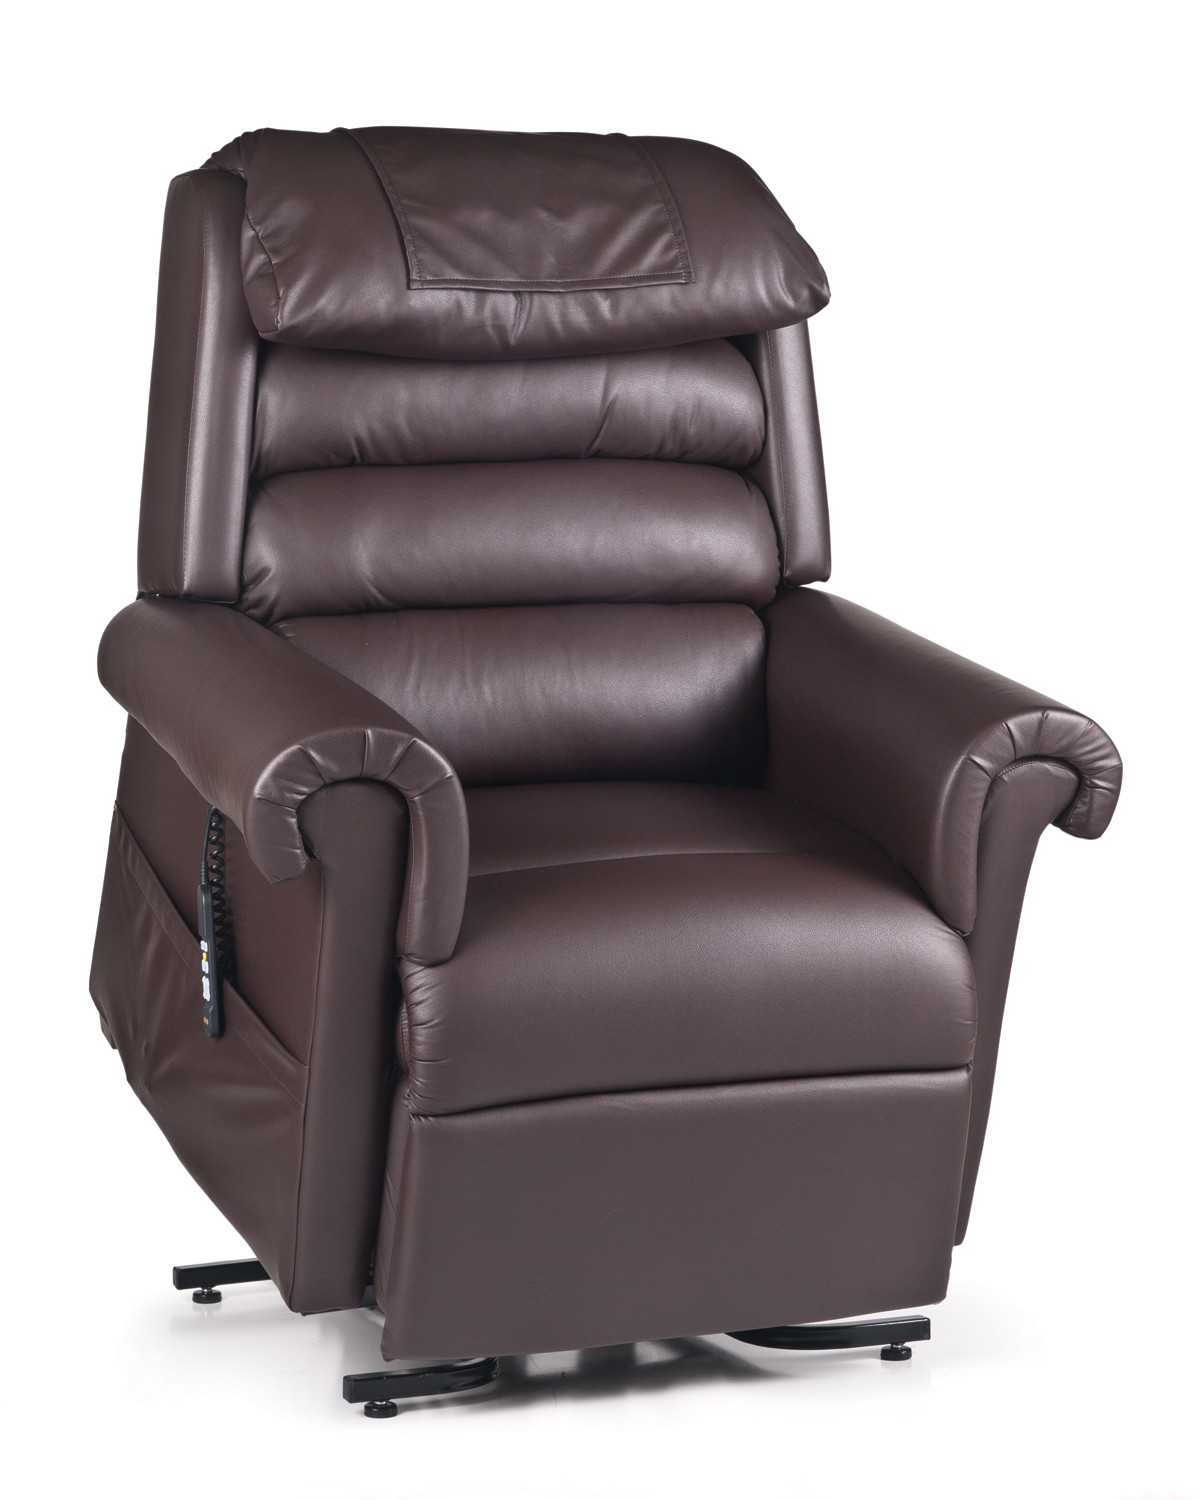 Best ideas about Golden Technologies Lift Chair
. Save or Pin Golden Technologies Relaxer PR 756 Maxi fort Lift Chair Now.